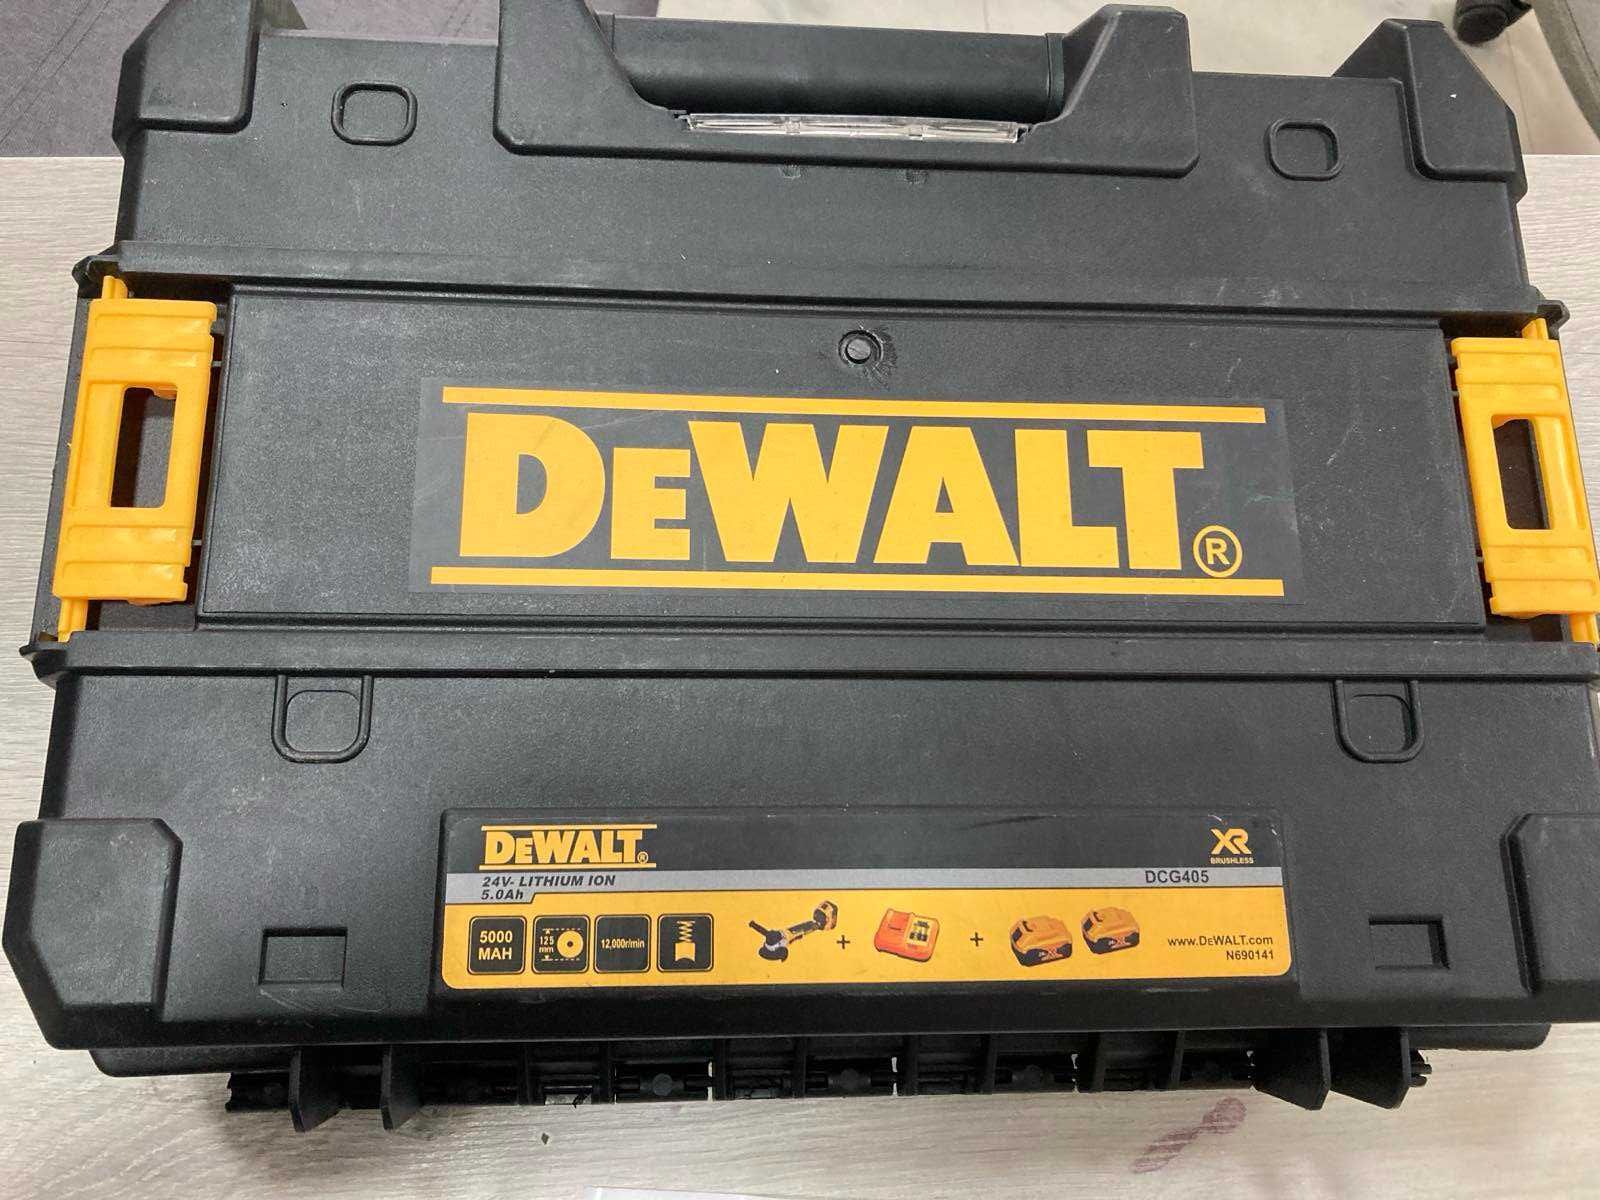 Ъглошлайф Dewalt DCG 405 2 бр. батерии